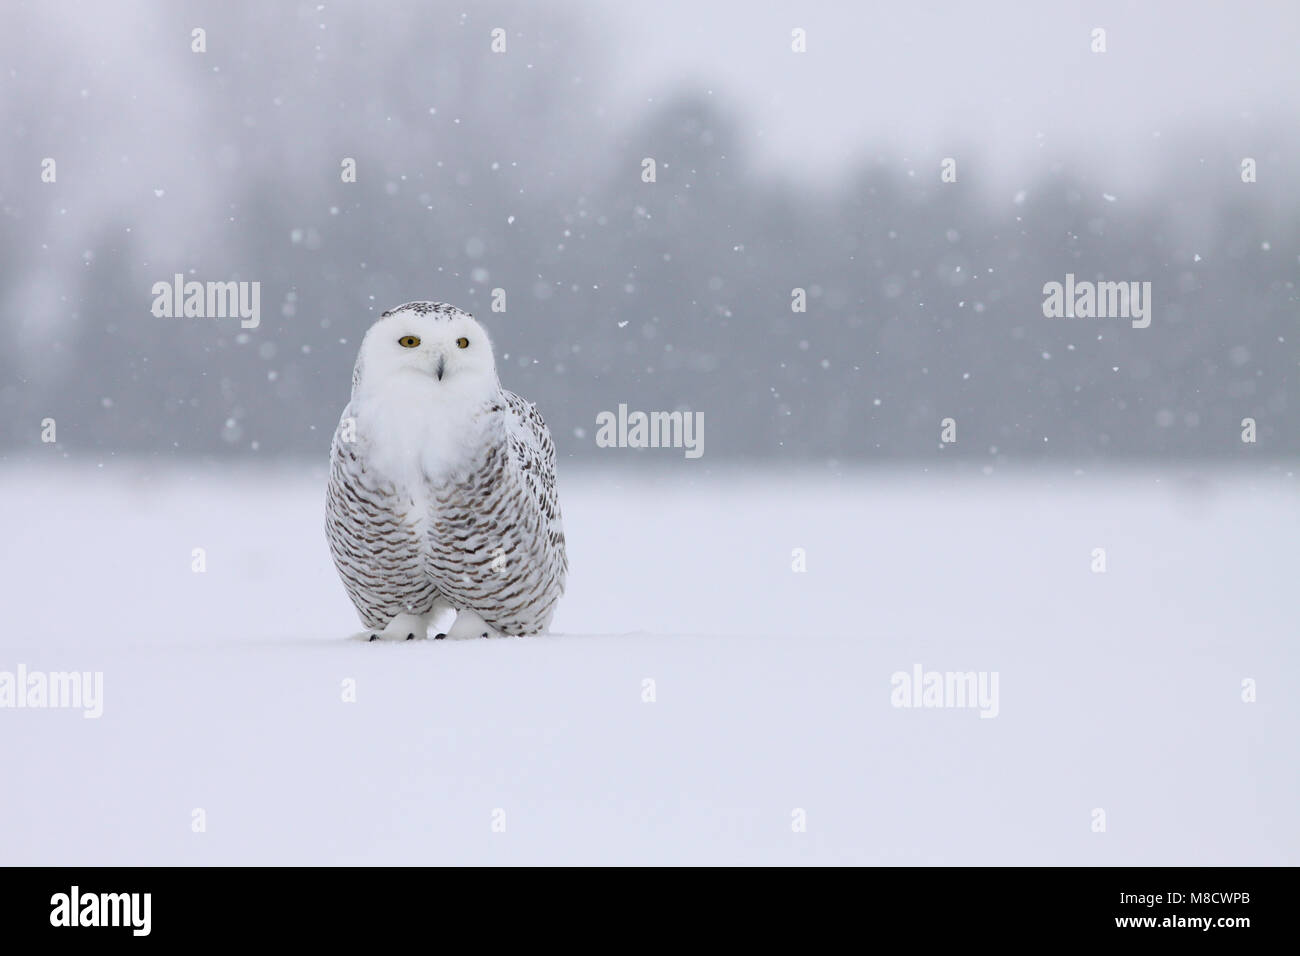 Sneeuwuil zittend in sneeuw; Snowy Owl perched in snow Stock Photo